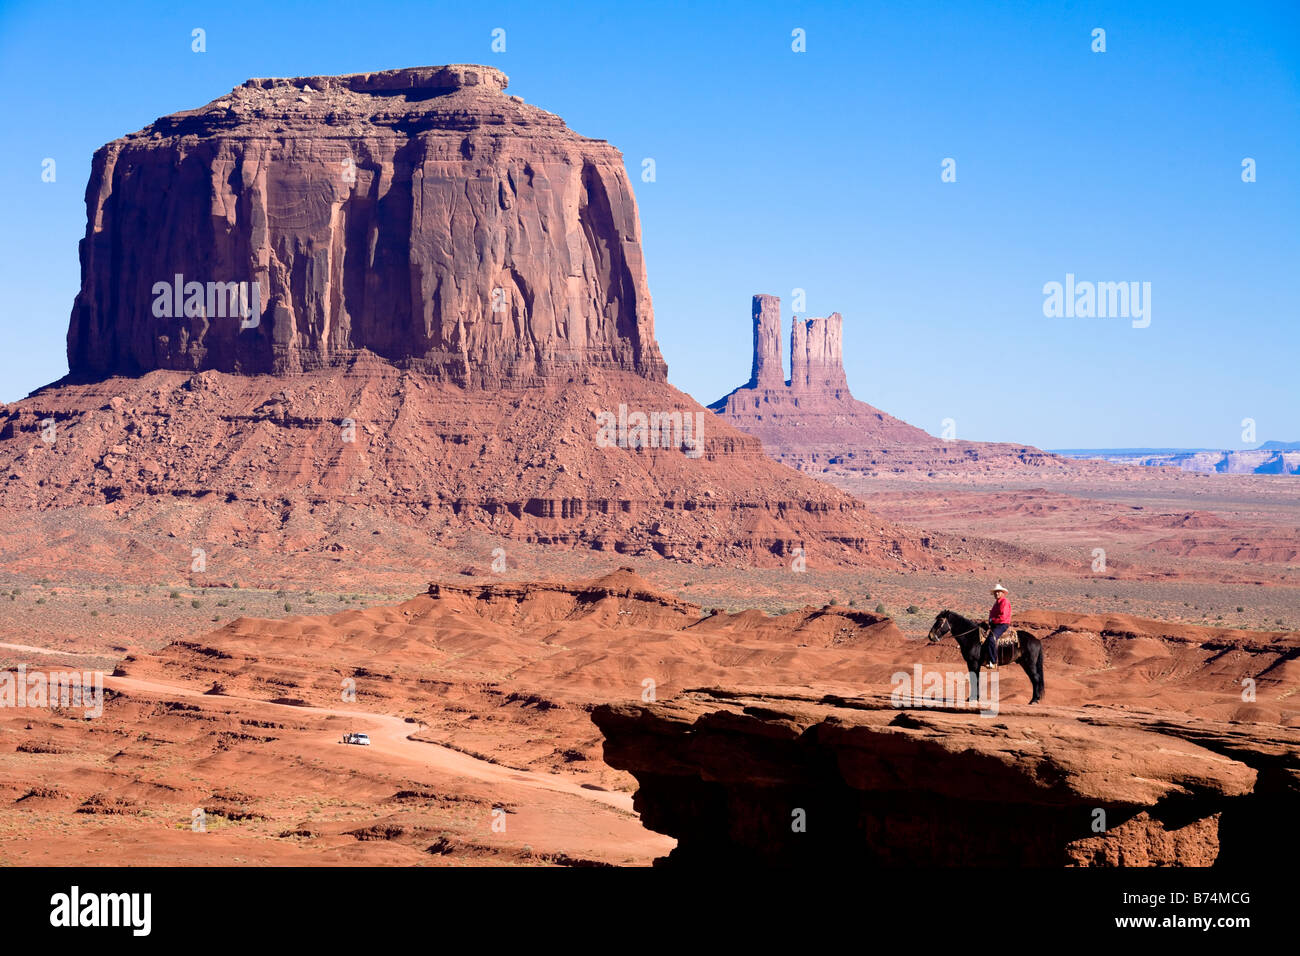 Mann auf Pferd am Rand der Klippe am John Ford Point im Monument Valley Navajo Tribal Park, Arizona, USA Stockfoto